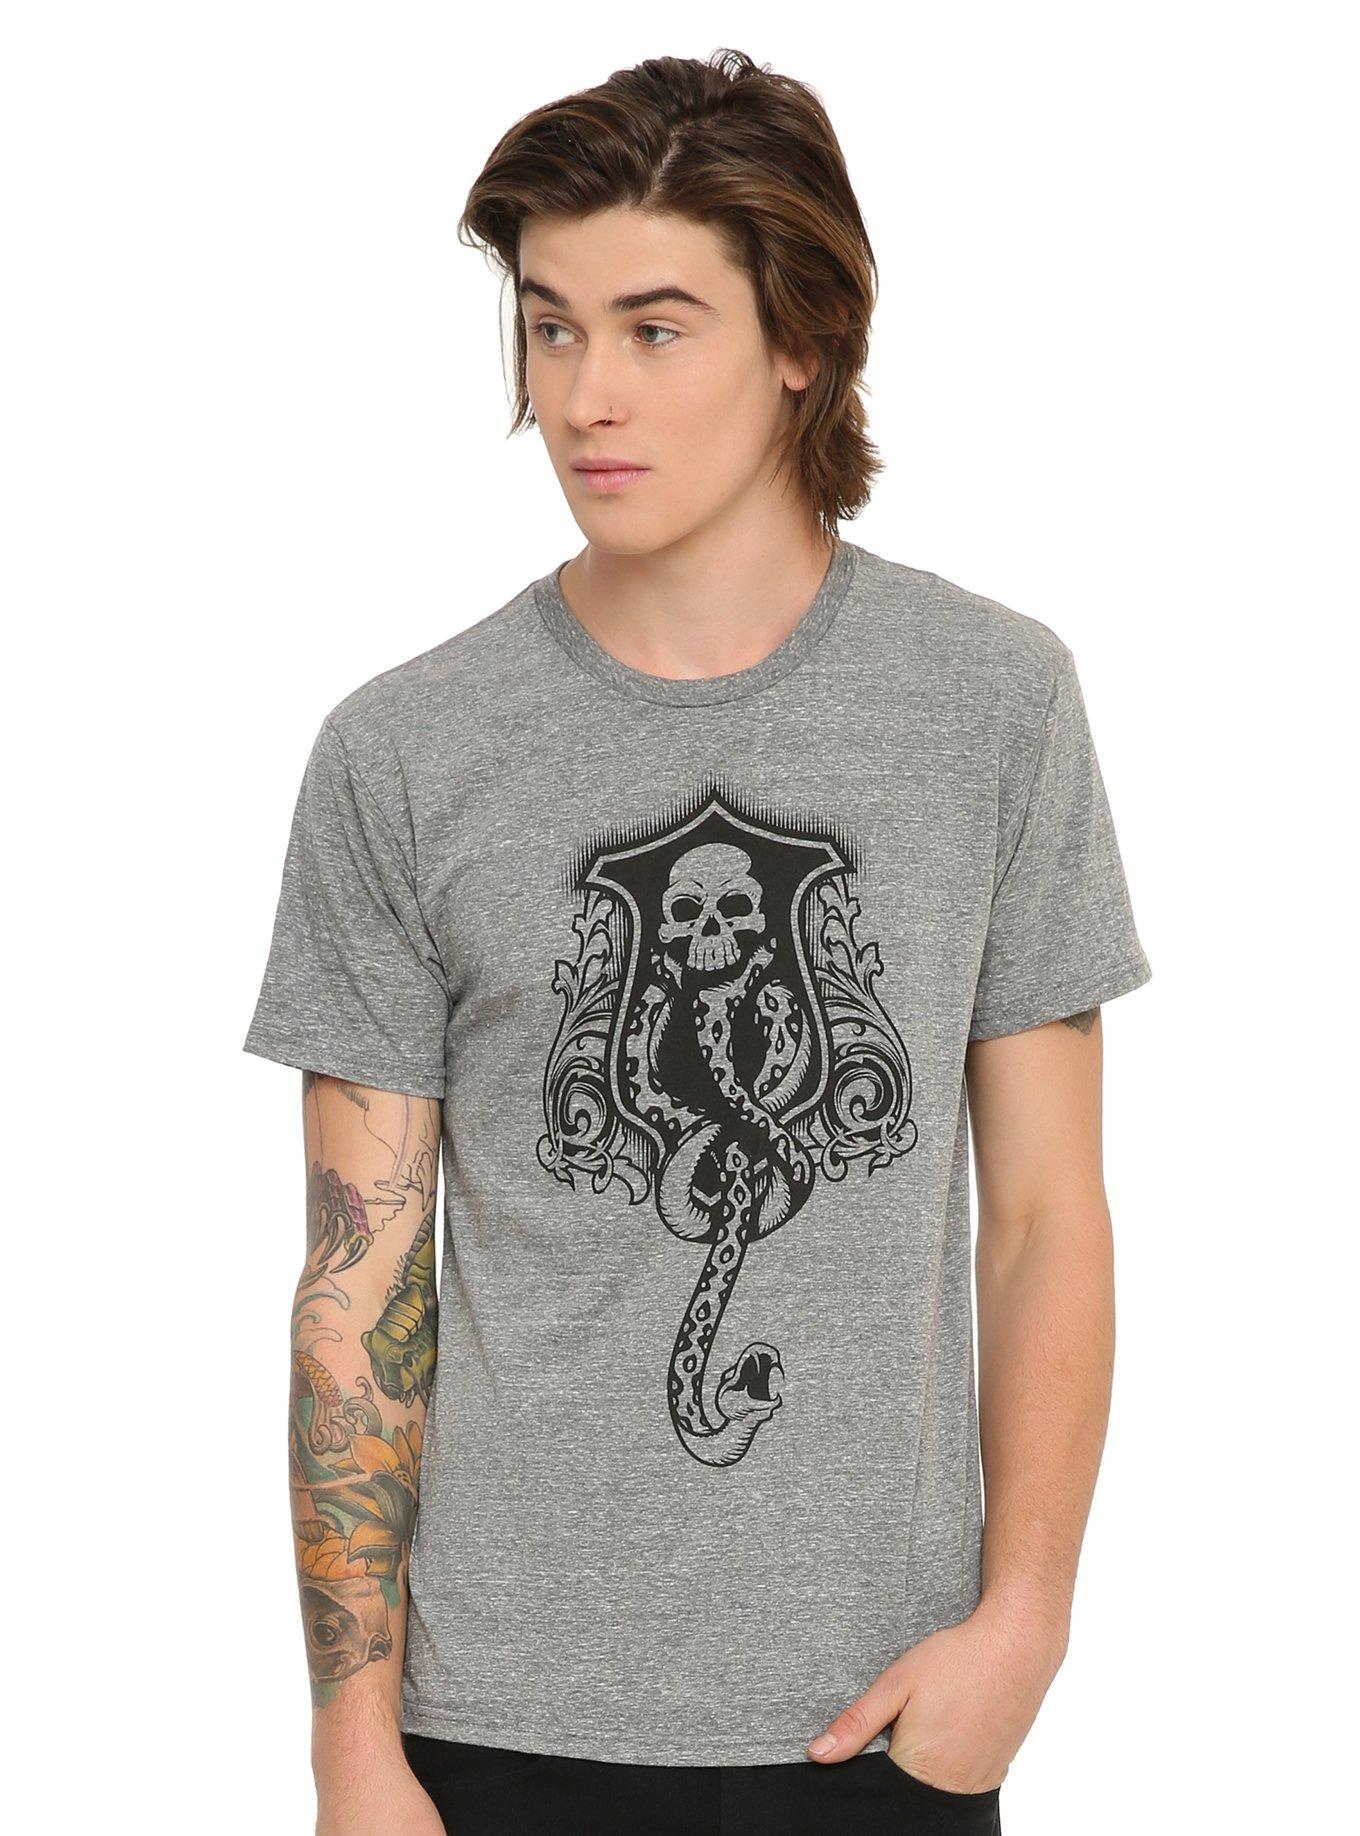 Harry Potter Death Eaters Dark Mark T-Shirt | Hot Topic